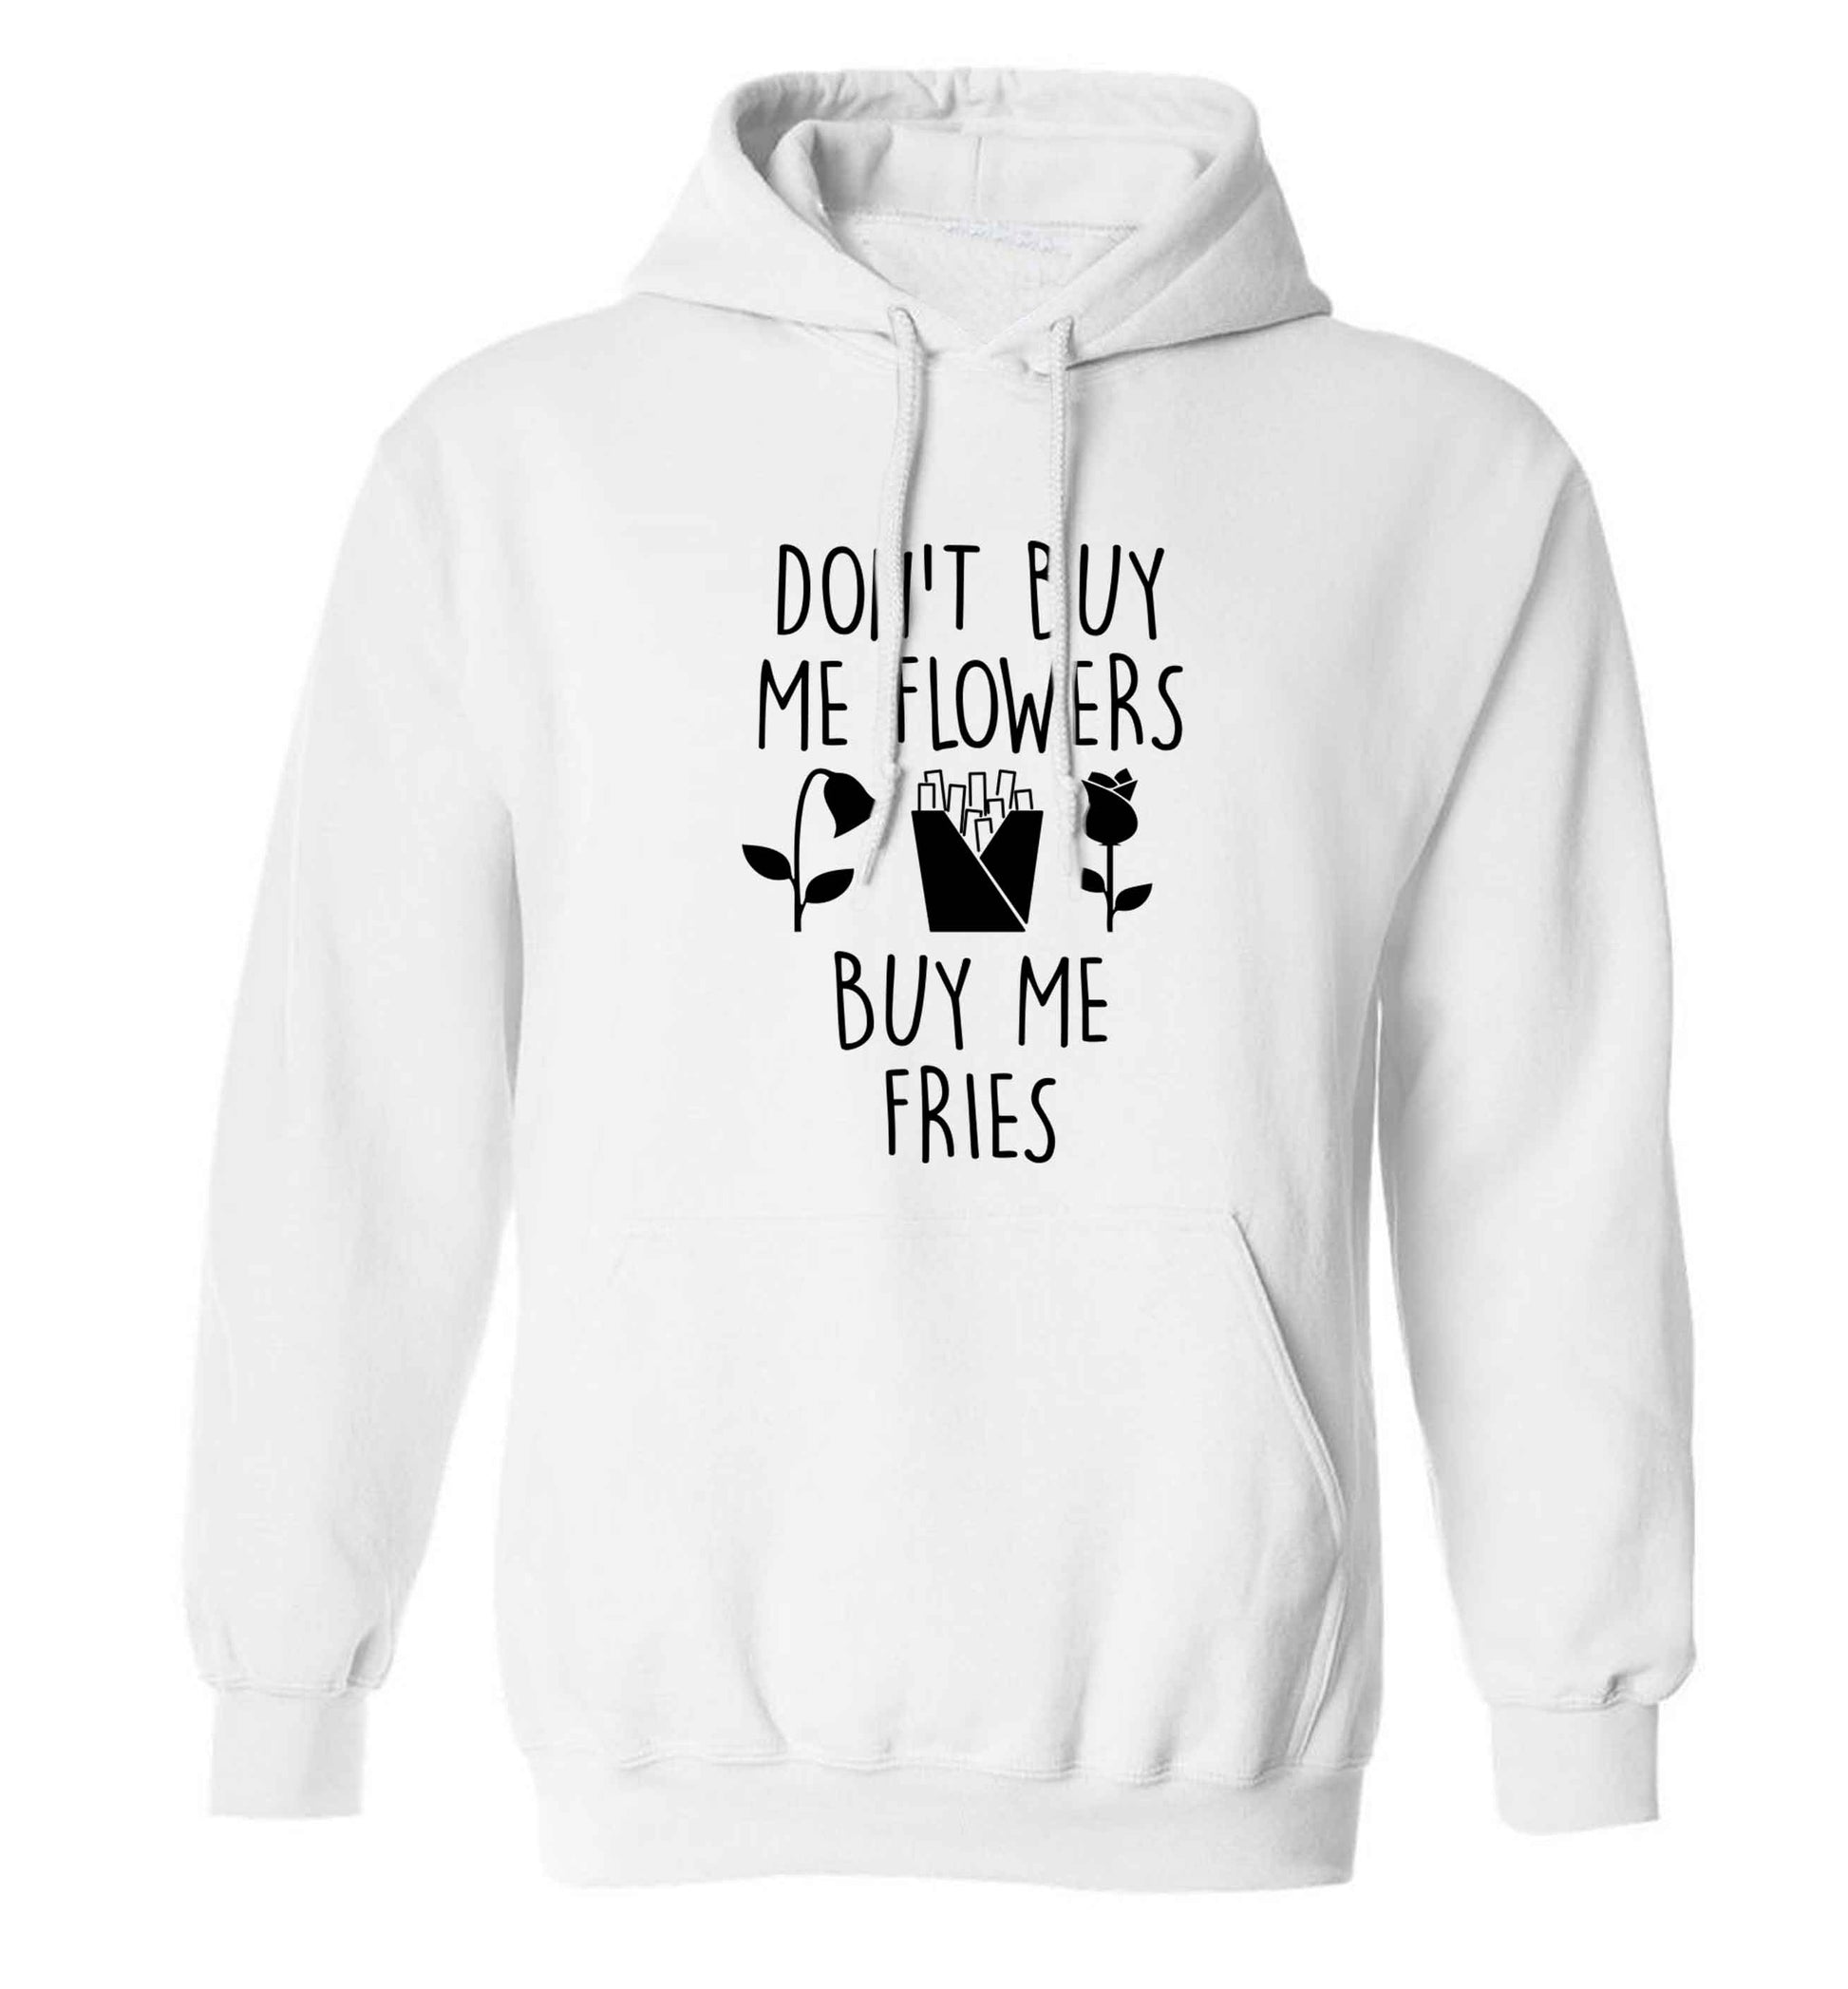 Don't buy me flowers buy me fries adults unisex white hoodie 2XL